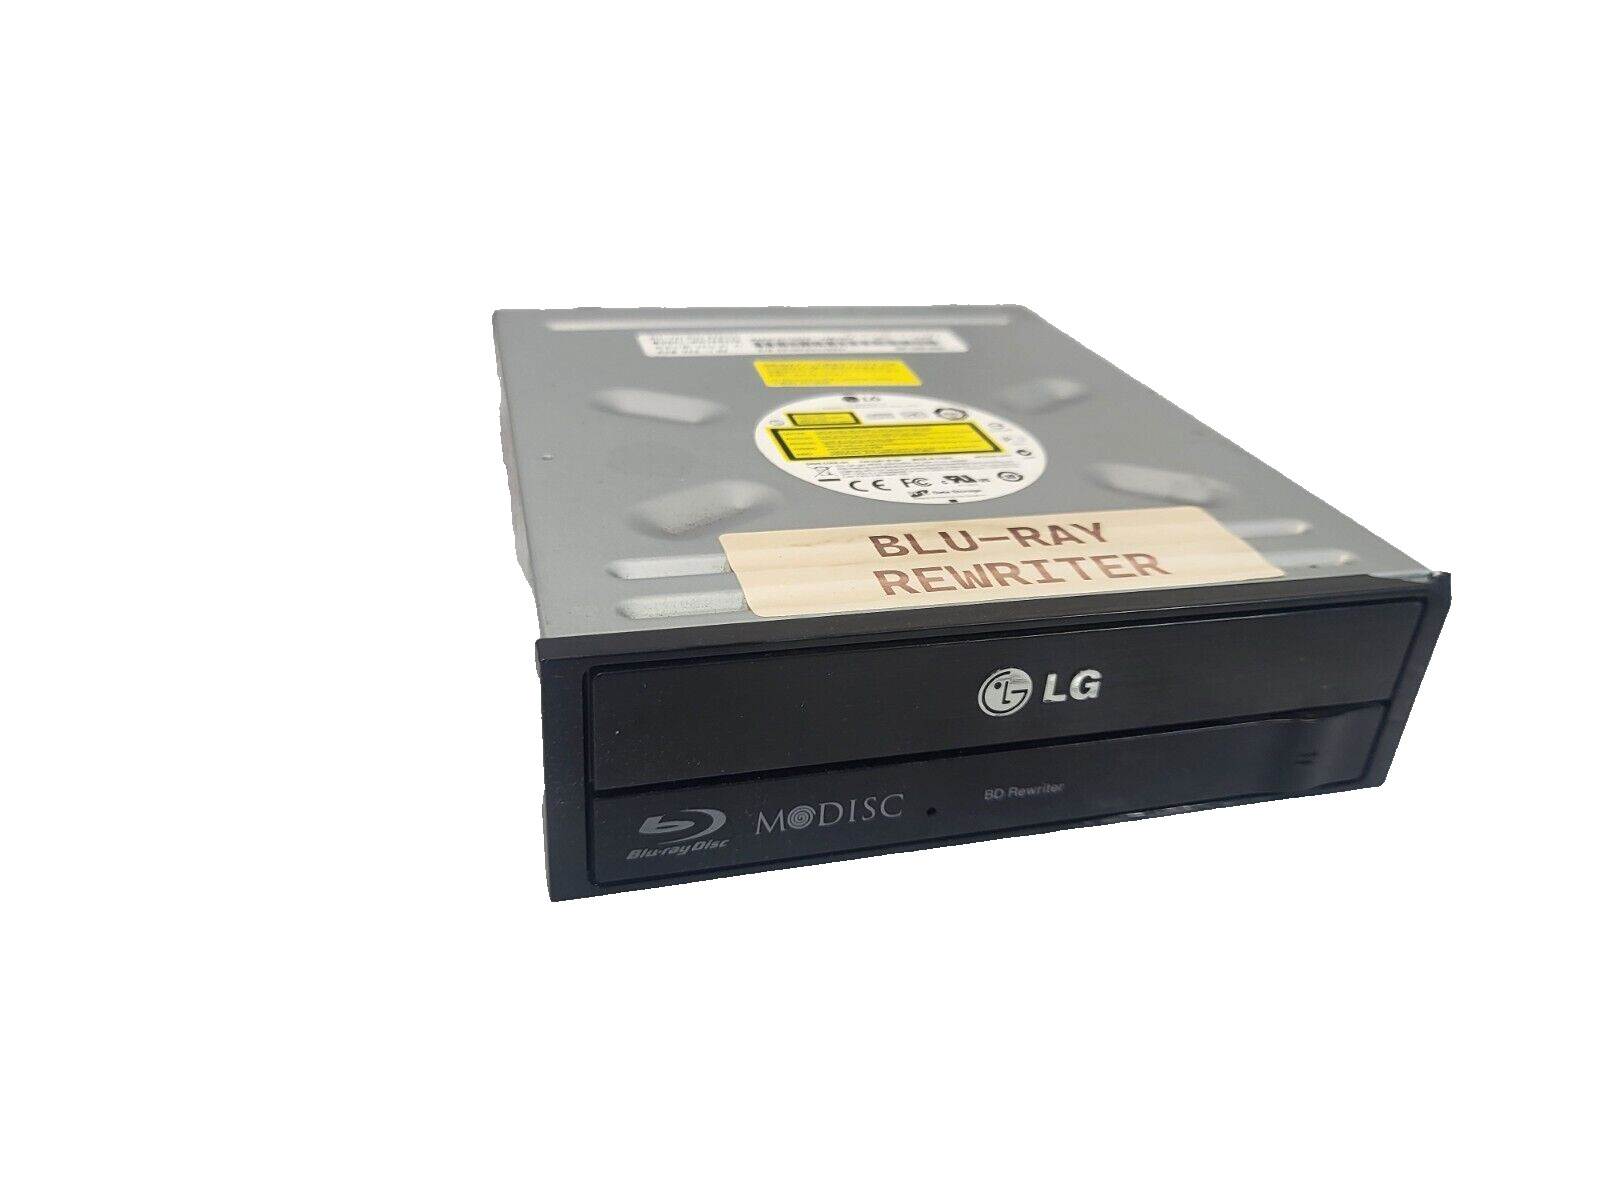 LG WH16NS40 Internal SATA 16x Blu-ray Disc Rewriter NS40 CD DVD BD Writer Burner